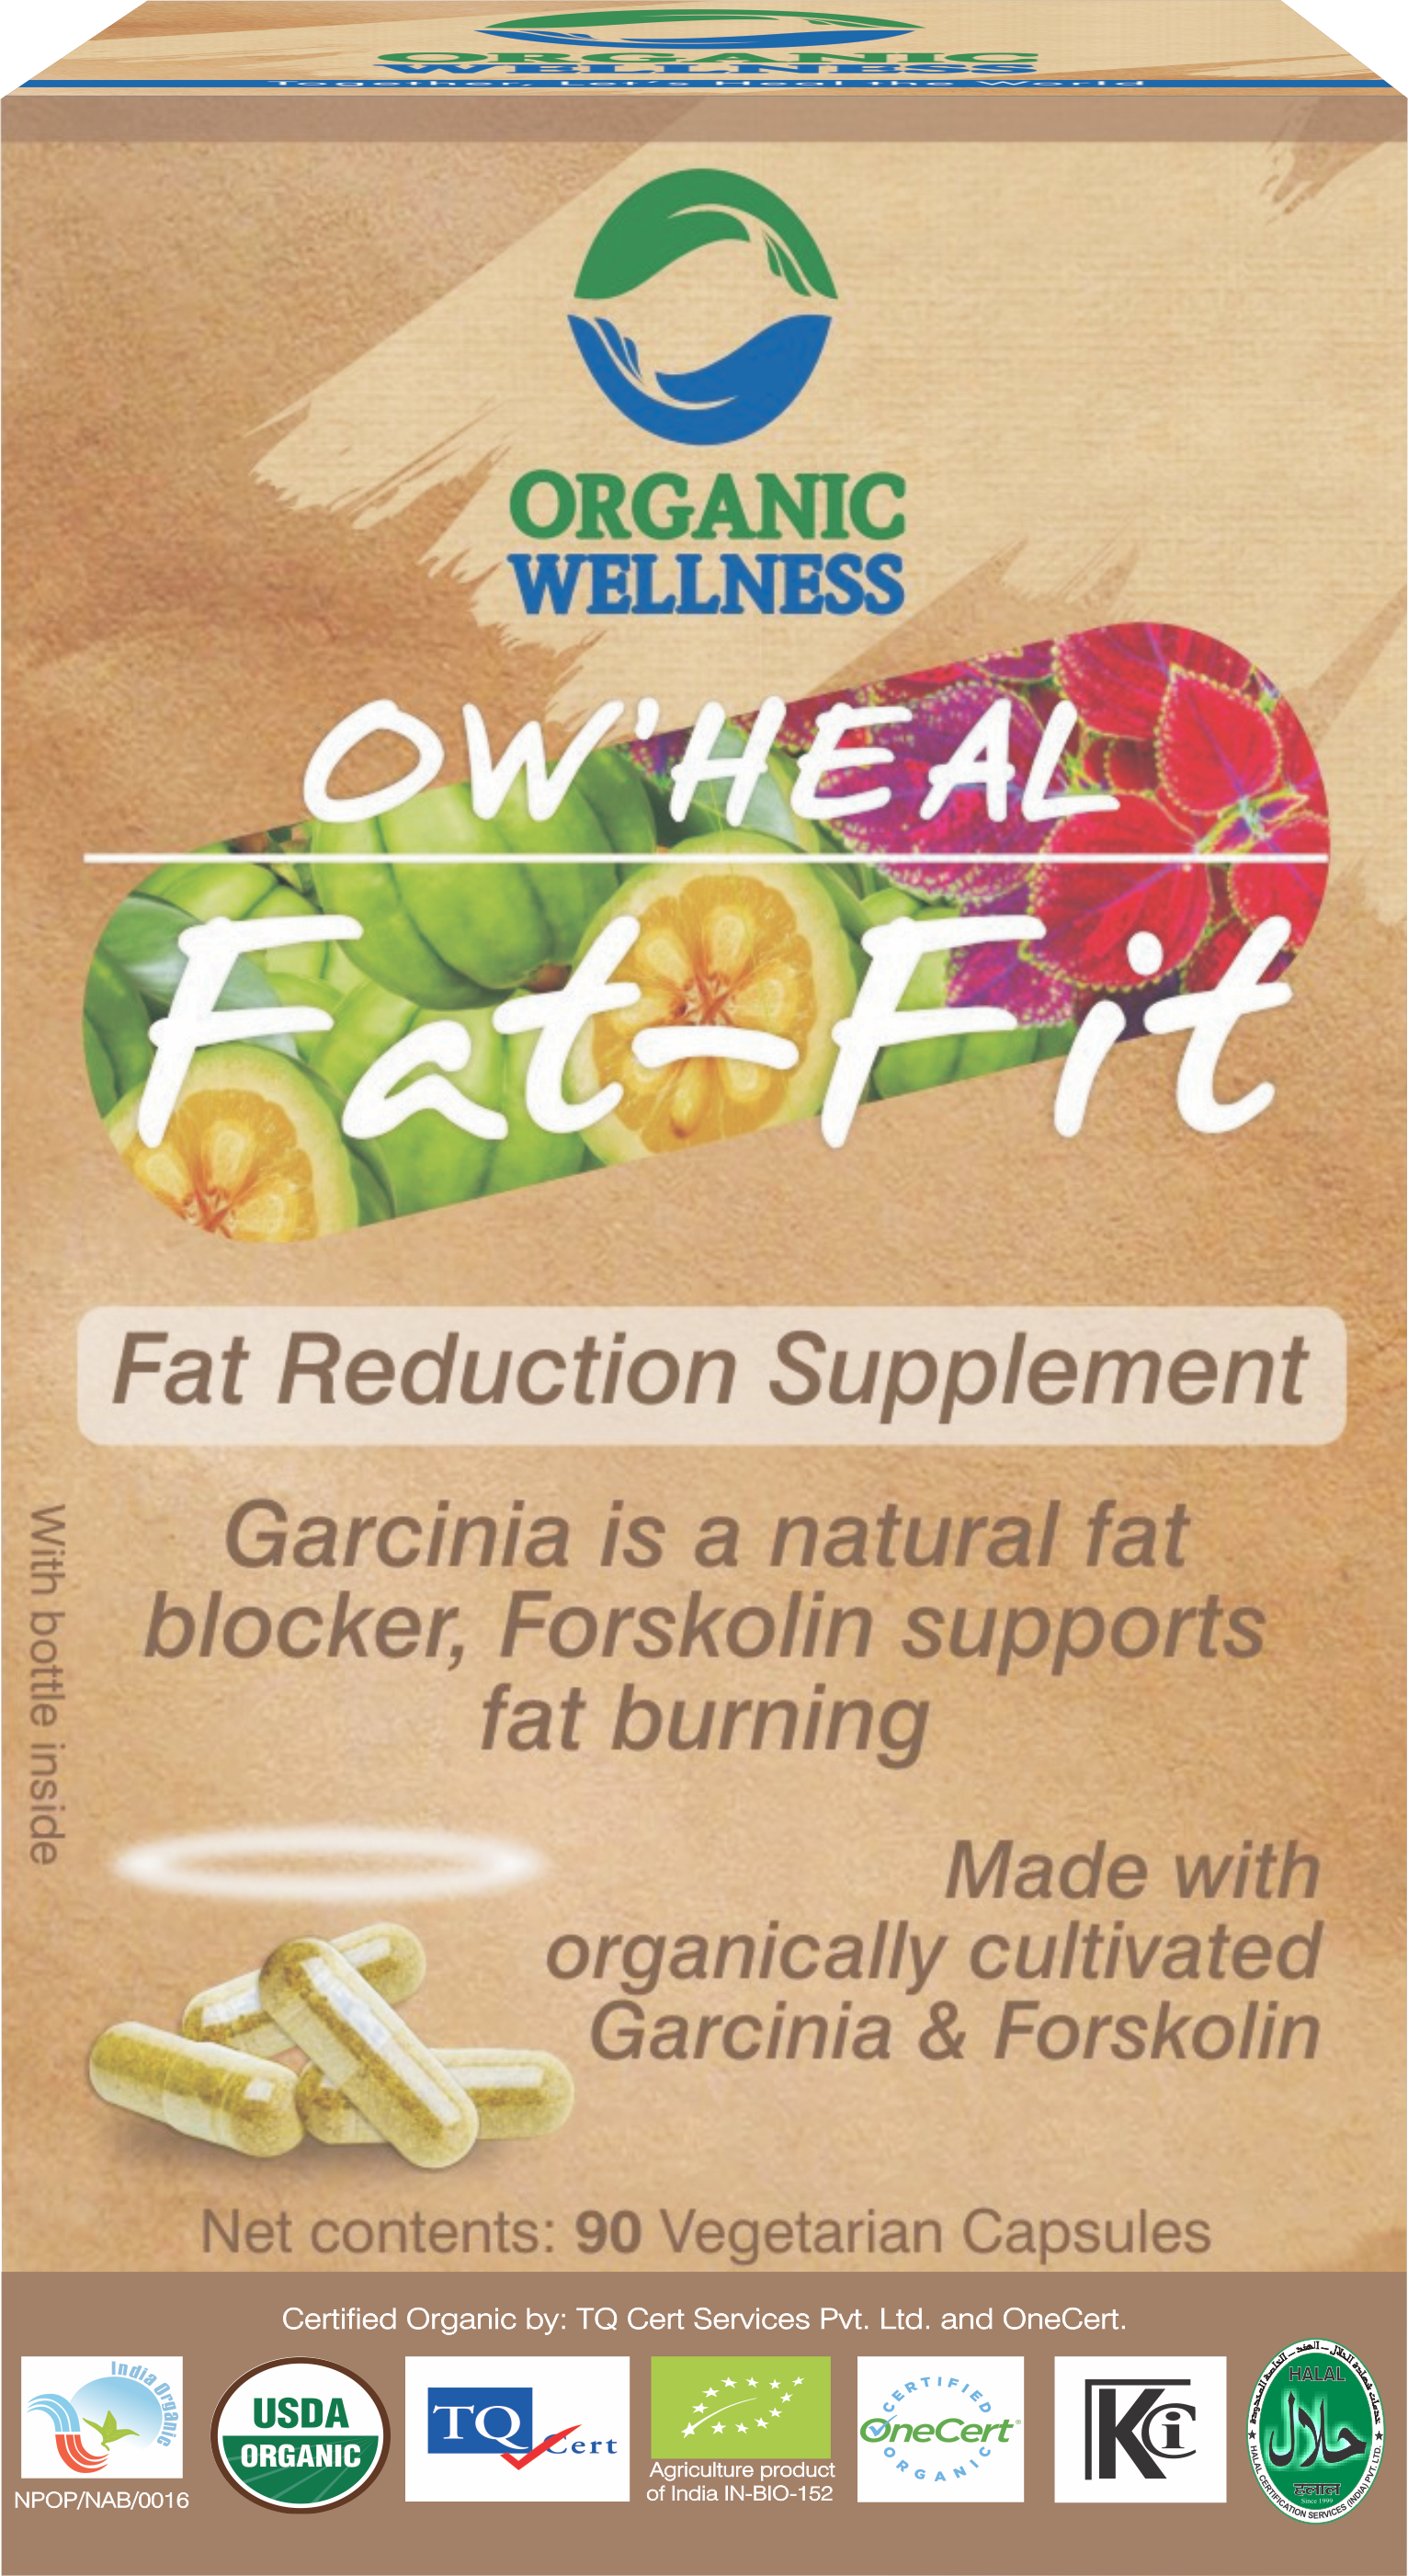 Buy Organic Wellness Heal Fat Fit Capsule at Best Price Online